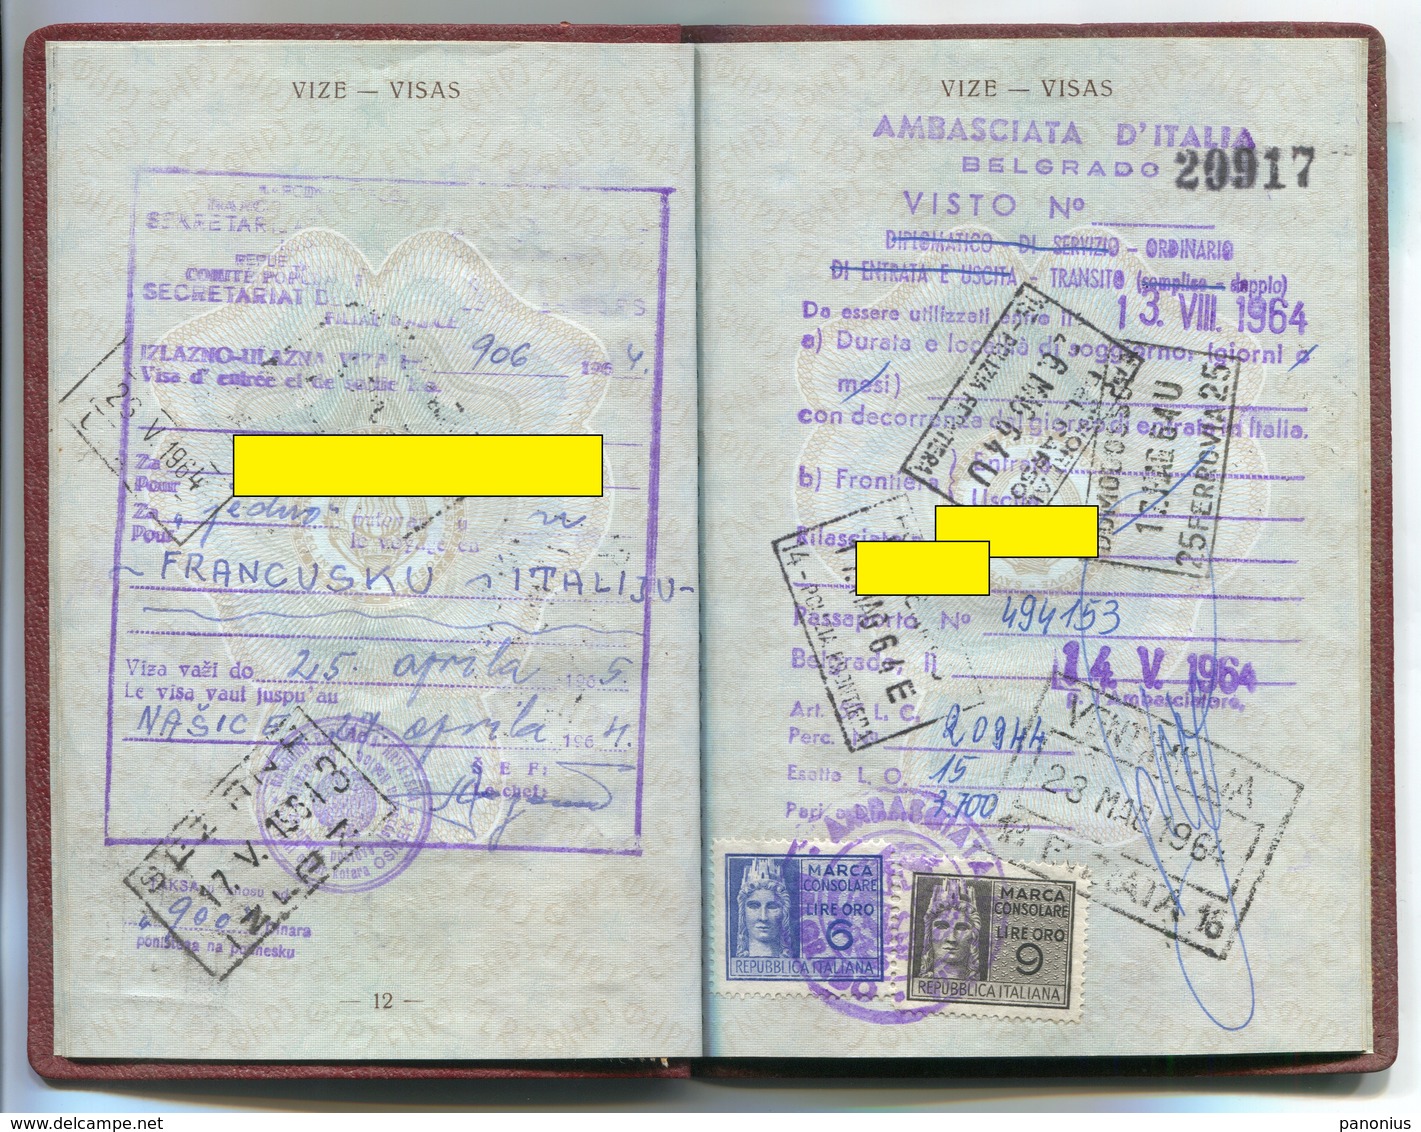 YUGOSLAVIA / PASSPORT REISEPASS 1963. - WITH VISAS FOR  ITALY FRANCE